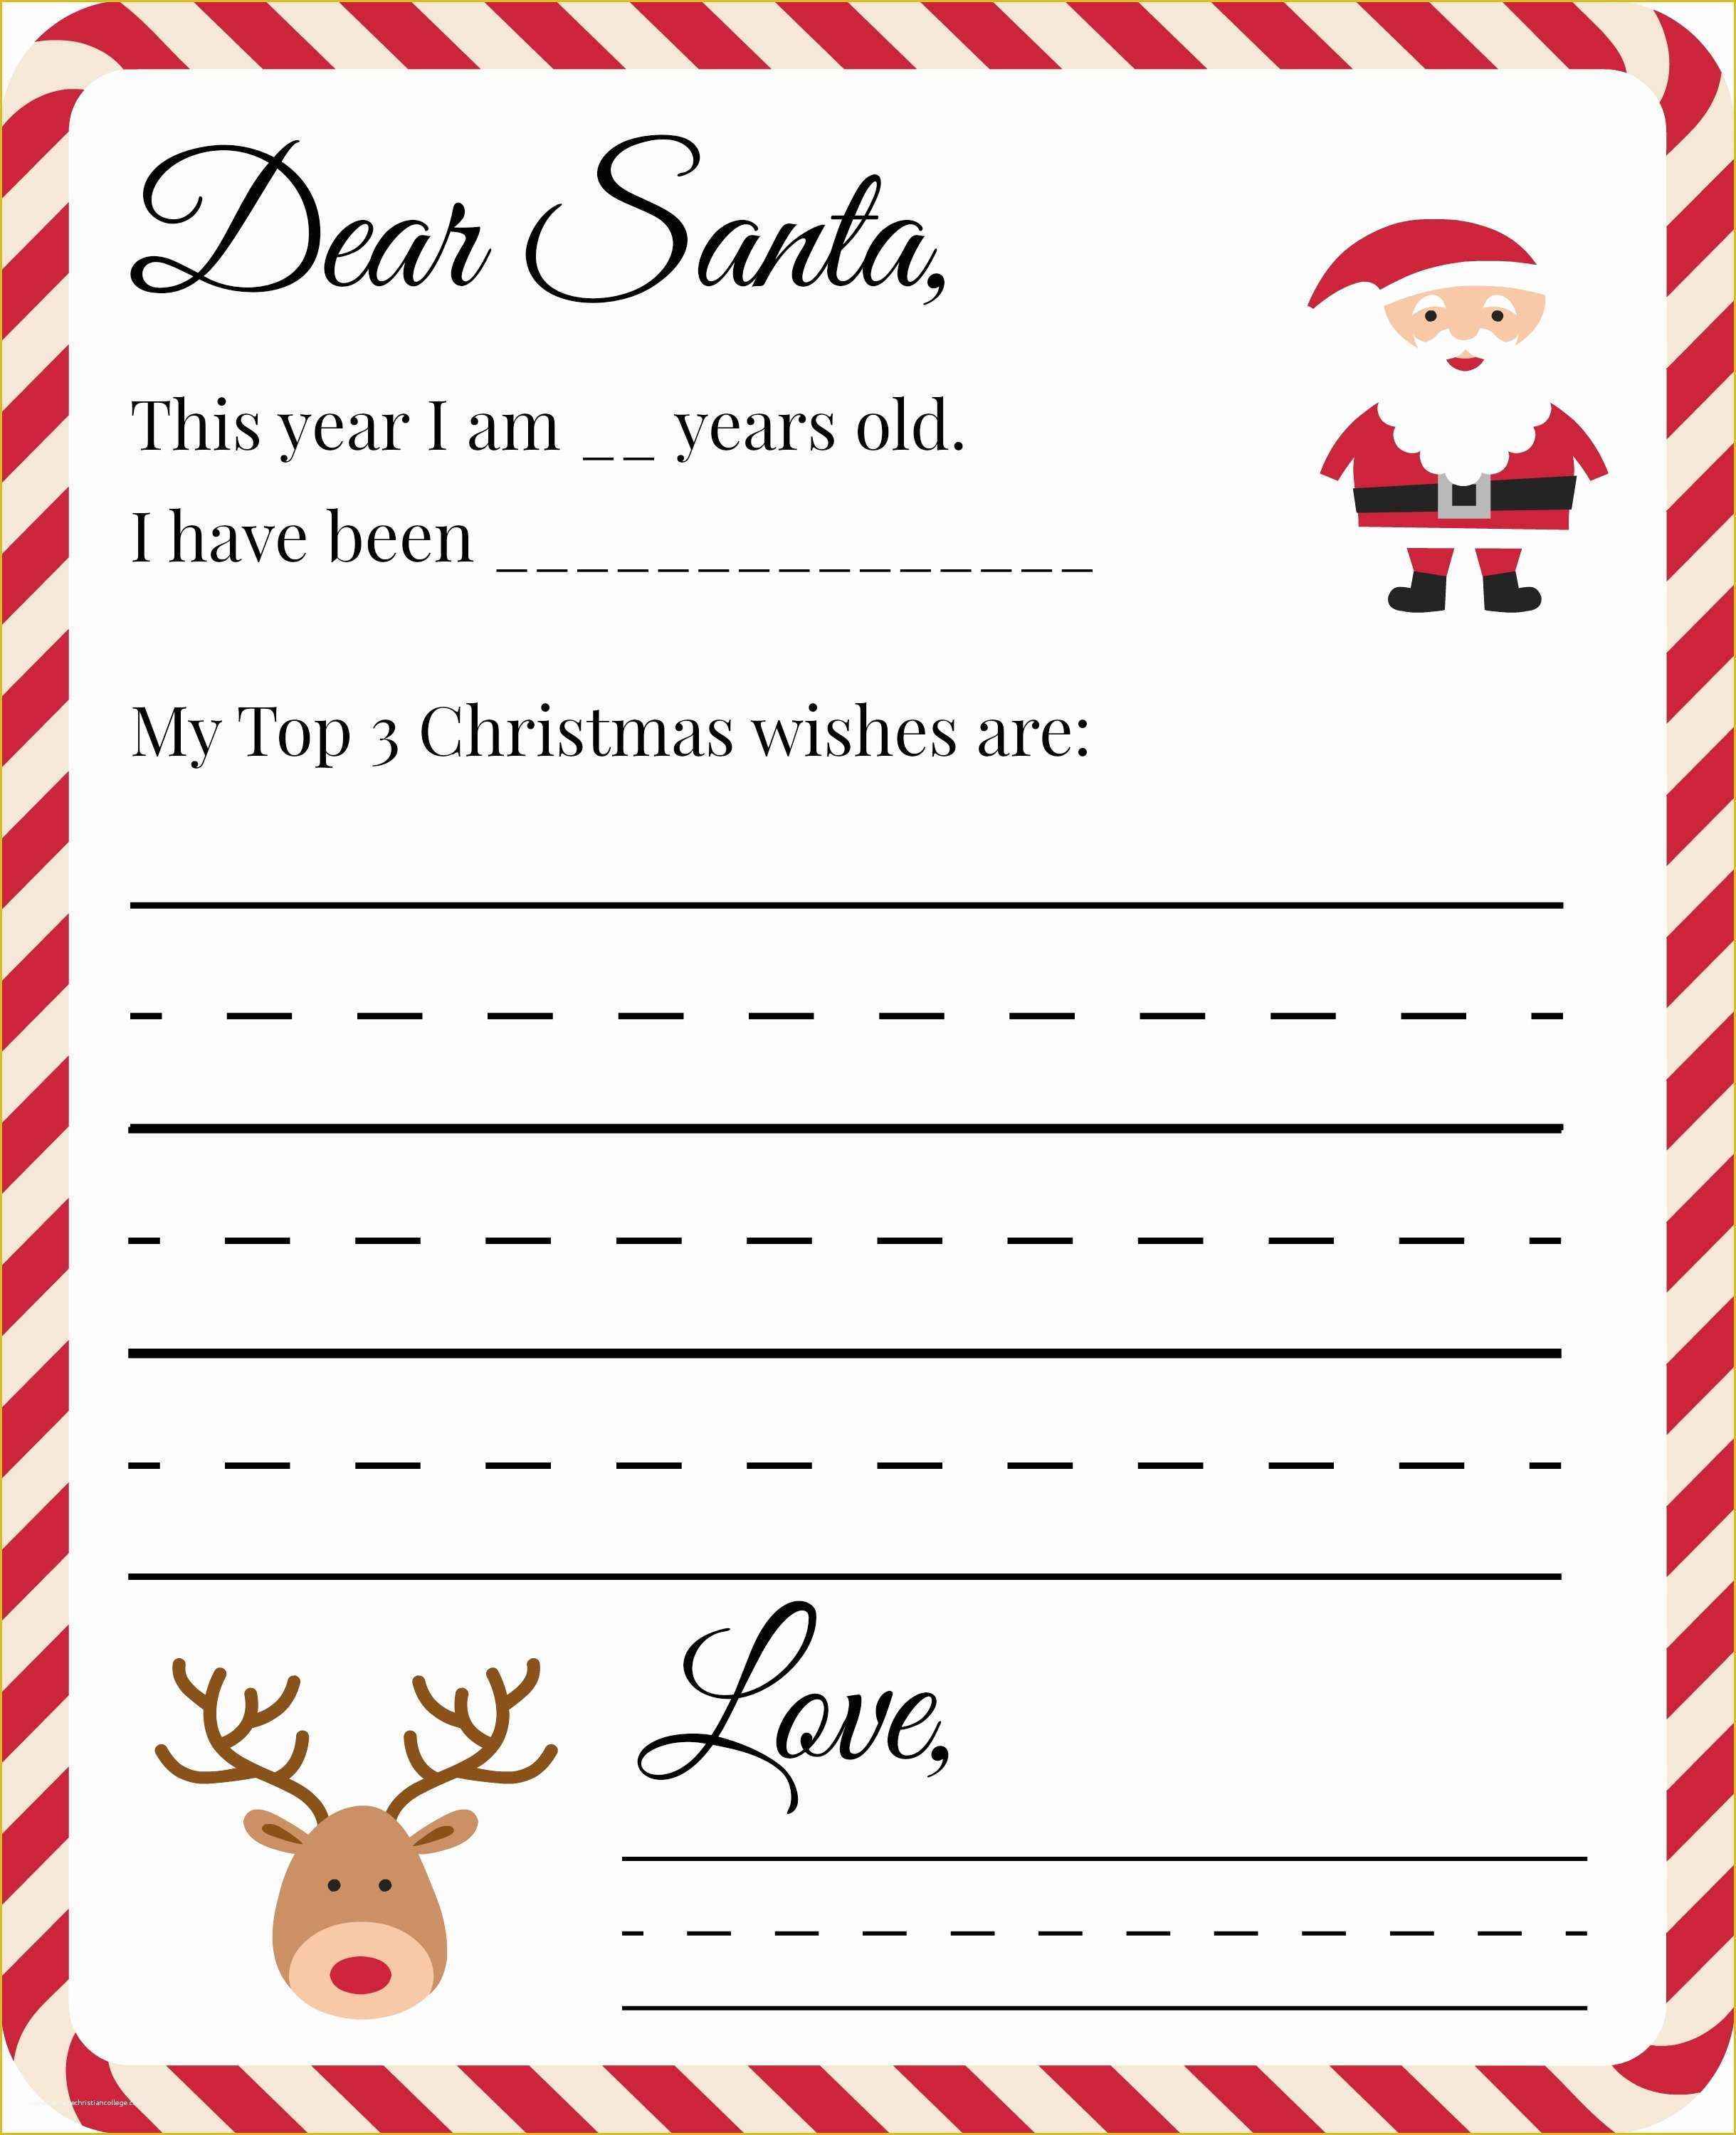 Dear Santa Letter Template Free Of Dear Santa Printable